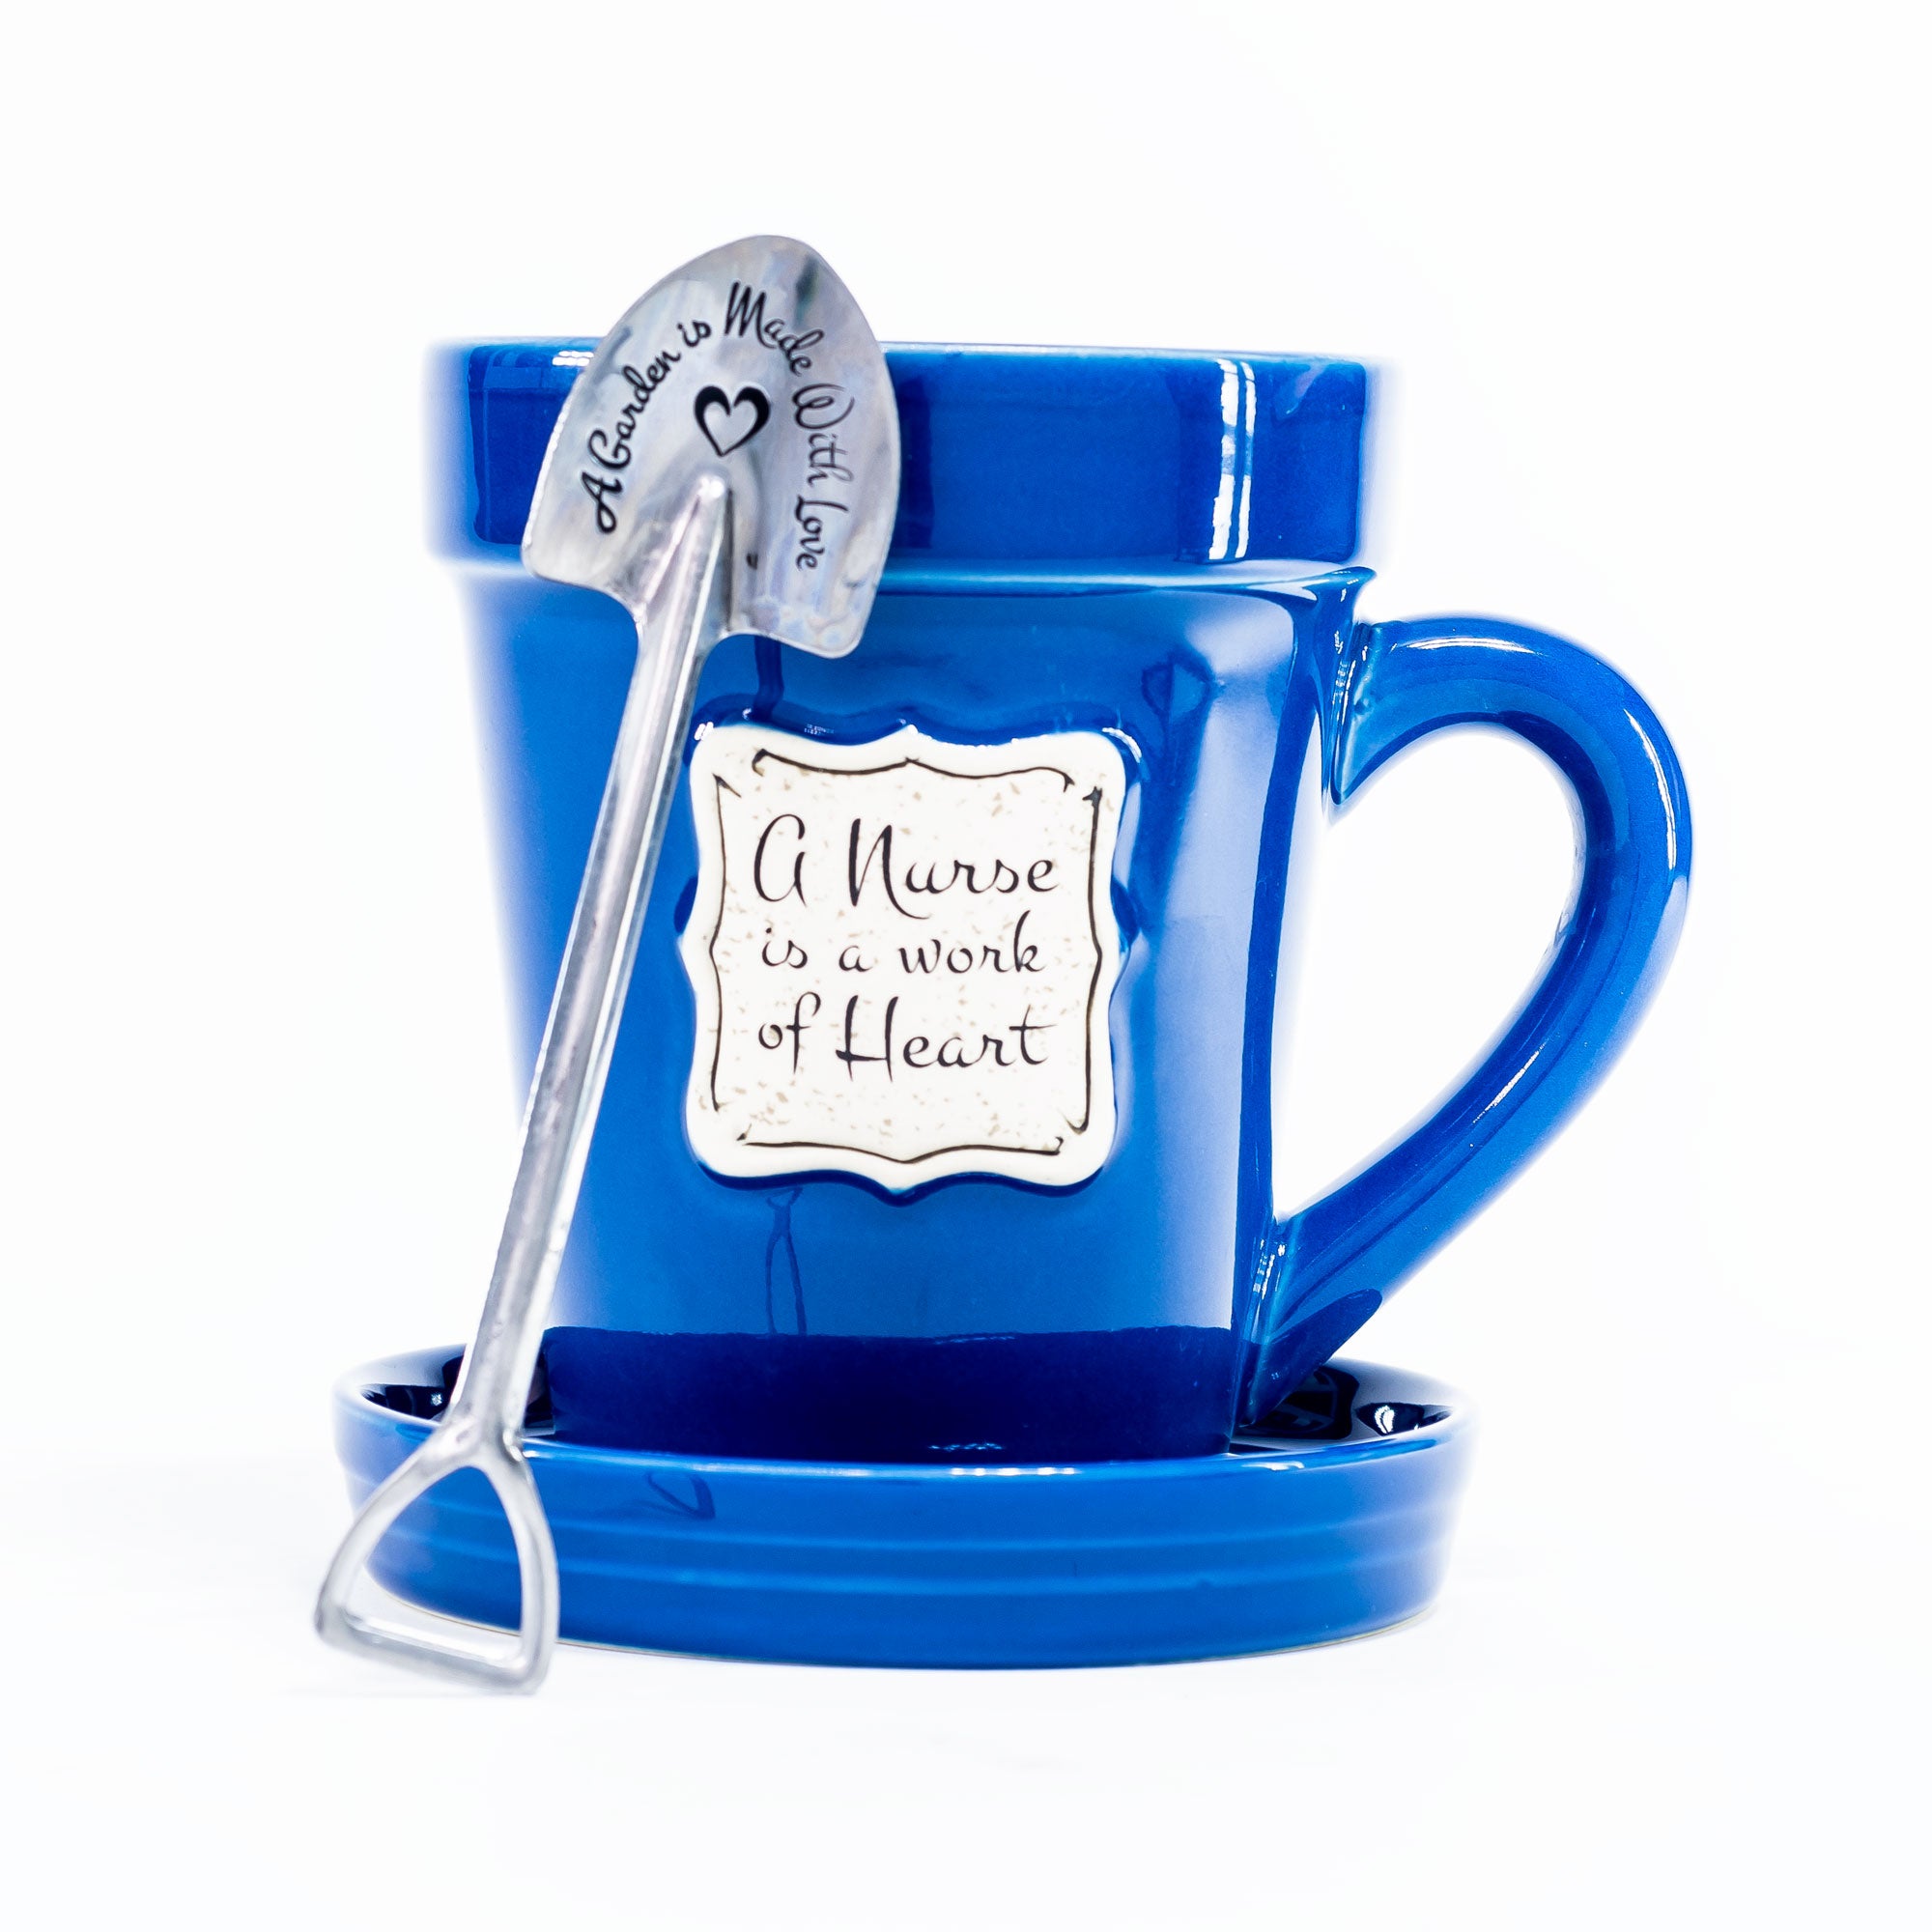 Flower Pot Mug: Med Blue - Nurse